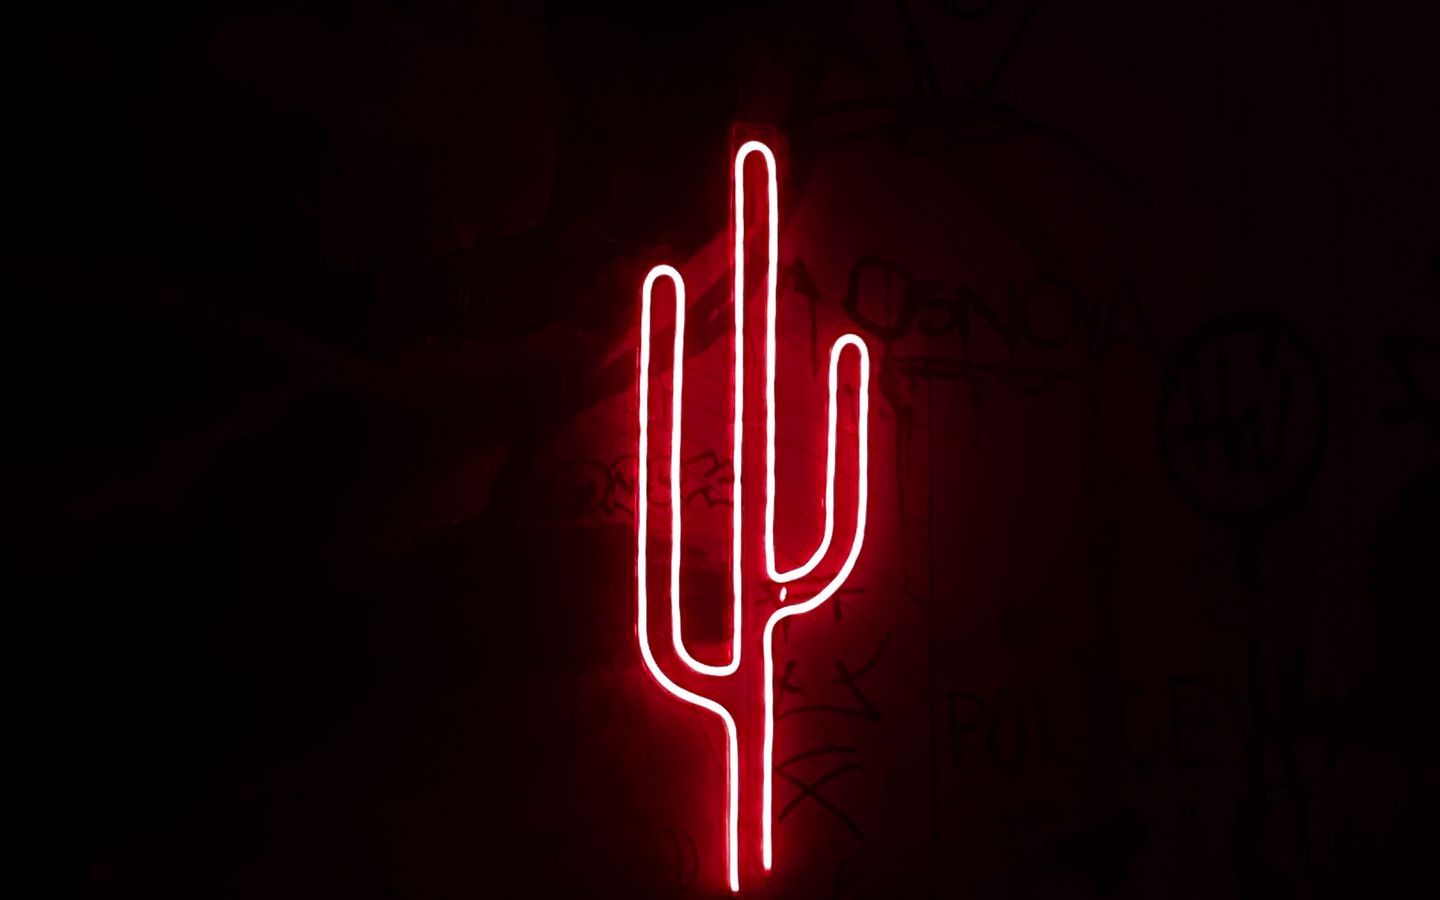 Download wallpaper 1440x900 cactus, neon, light, red, darkness widescreen 16:10 HD background